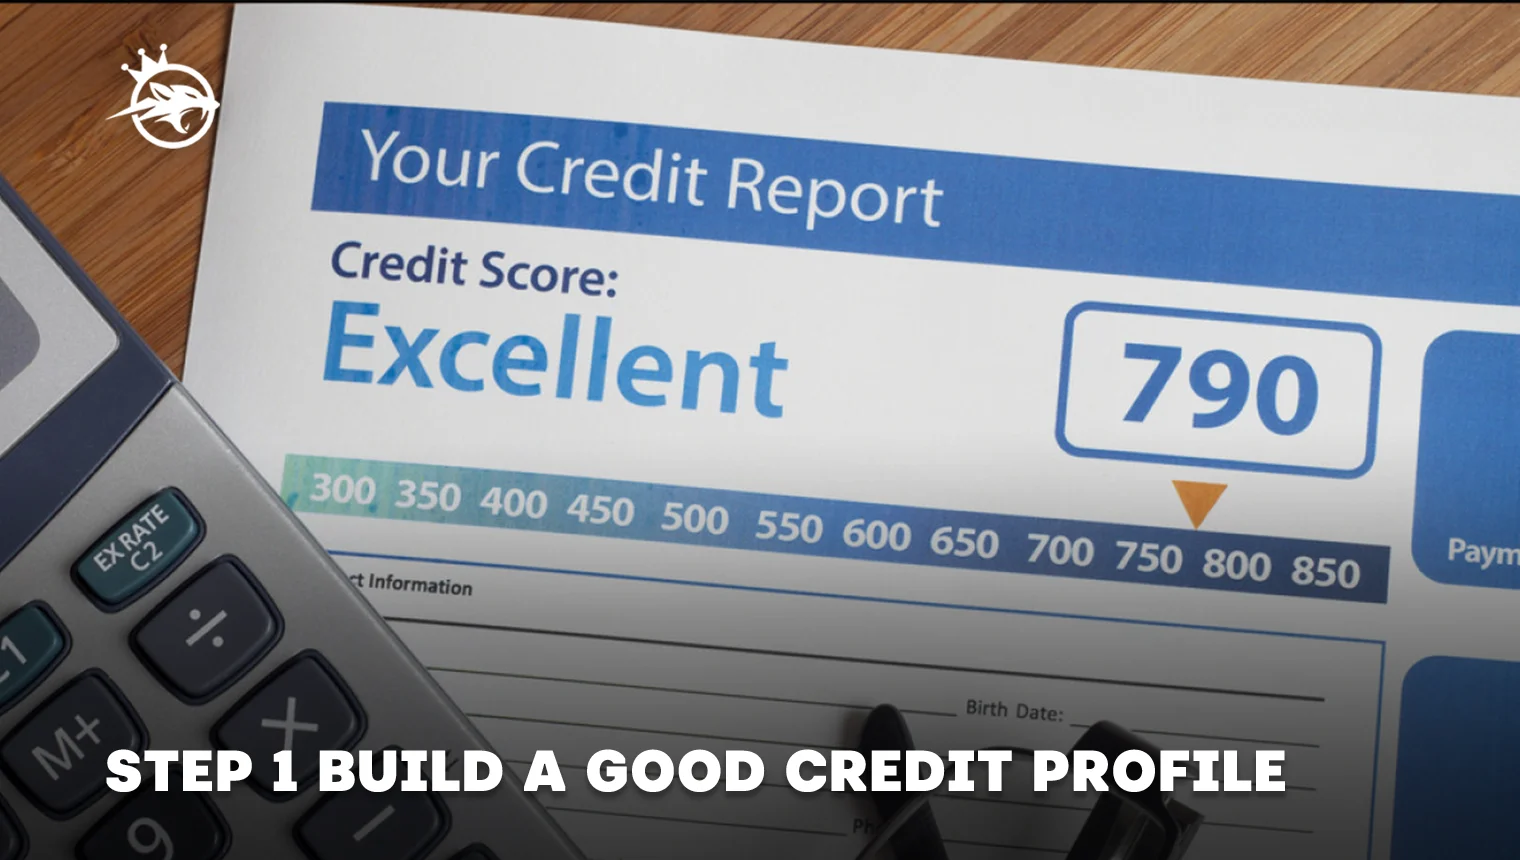 Step 1 Build a good credit profile